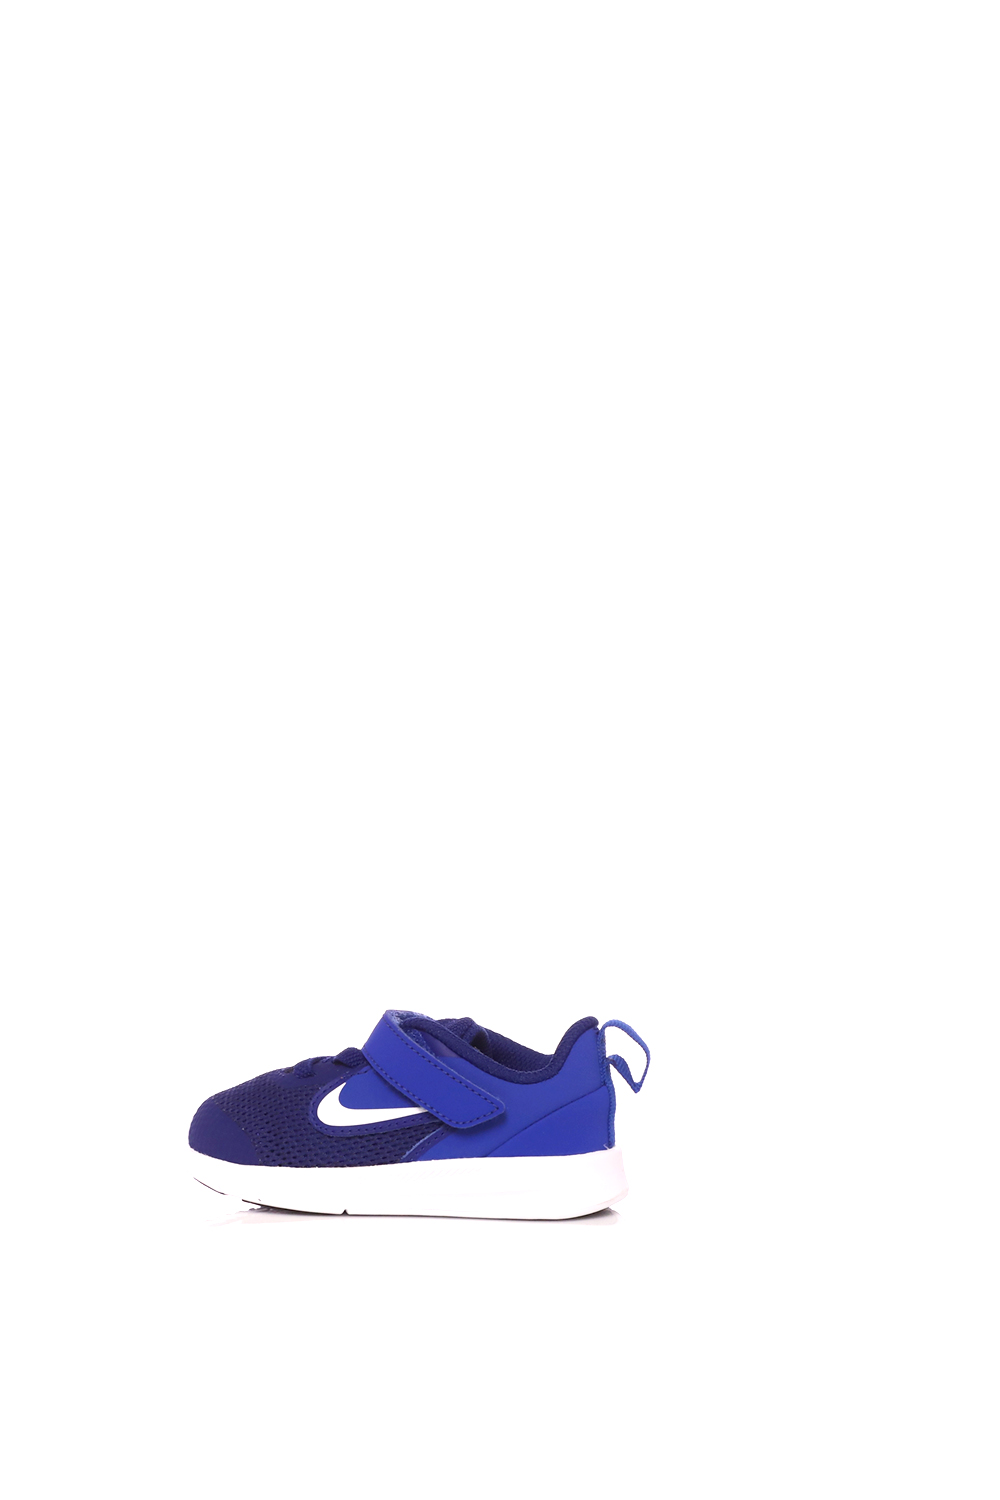 NIKE – Βρεφικα αθλητικα παπουτσια NIKE DOWNSHIFTER 9 μπλε